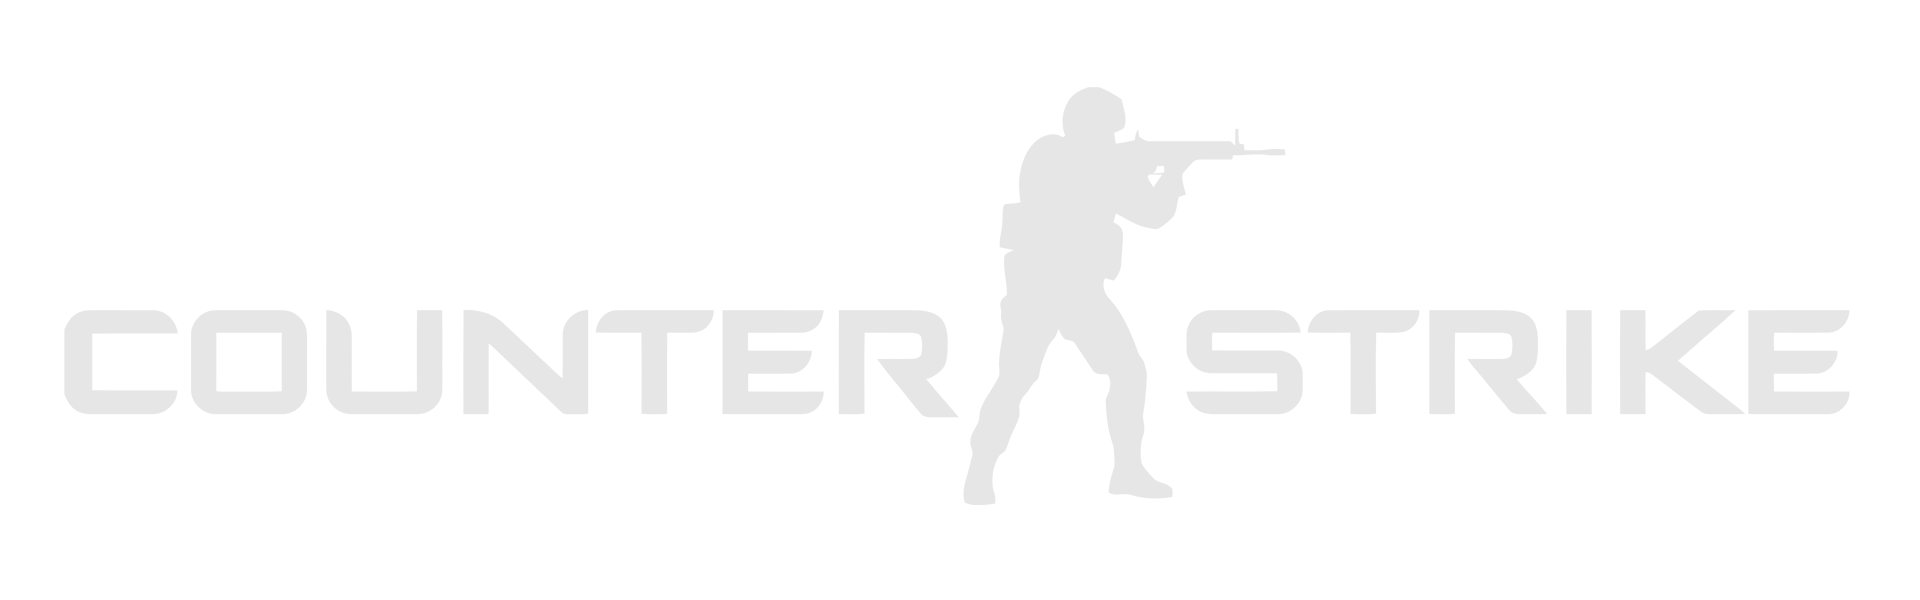 counter strike 16 logo